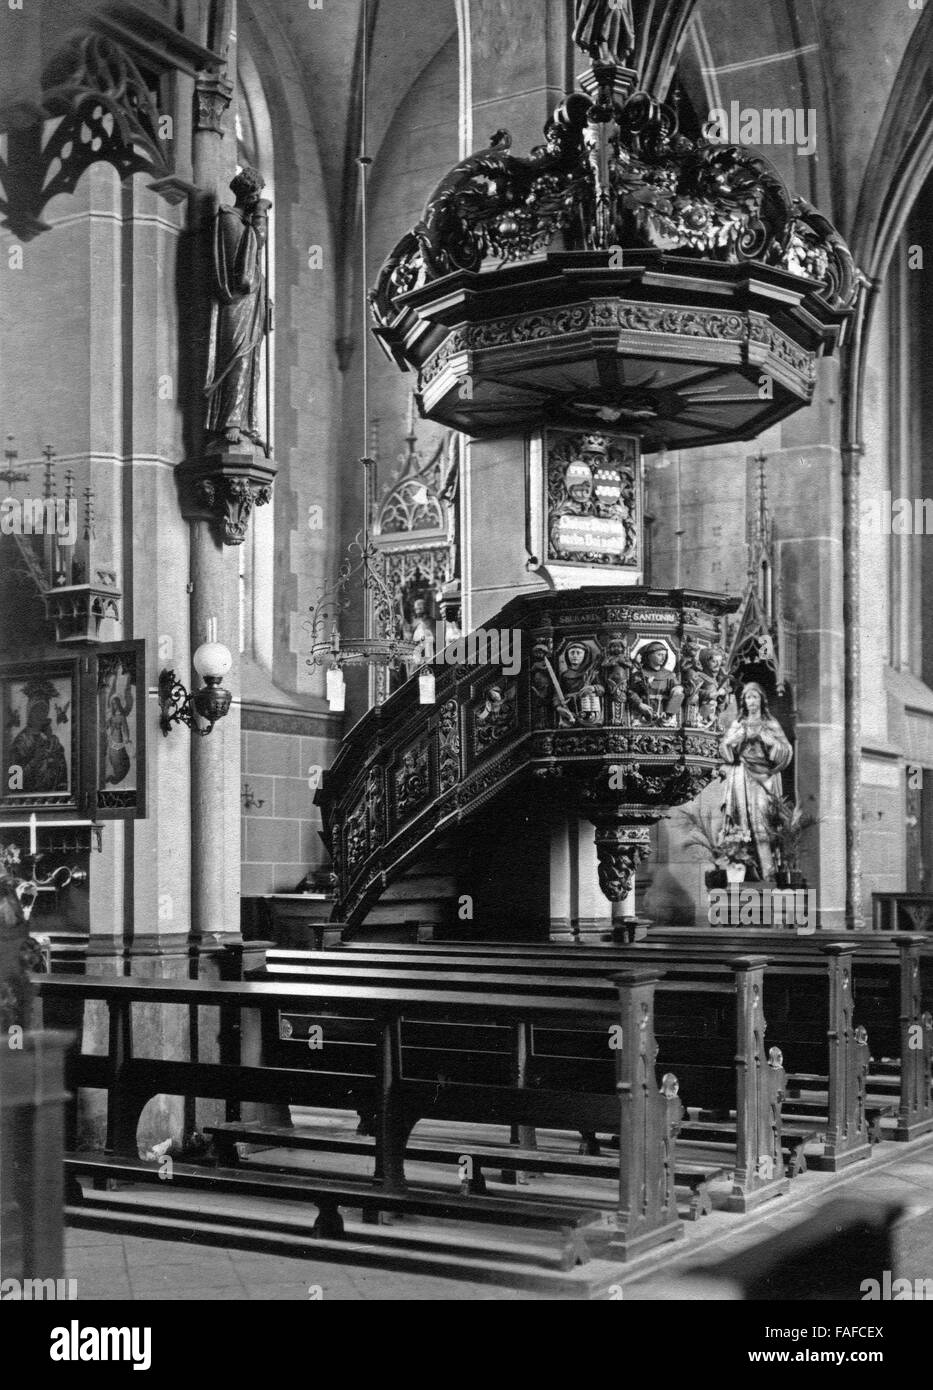 Im Inneren der St Pankratius Kirche in Deutschland, Bergheim bei Paffendorf 1920er Jahre. À l'intérieur de l'église St Pankratius à Paffendorf près de Bergheim, Allemagne 1920. Banque D'Images